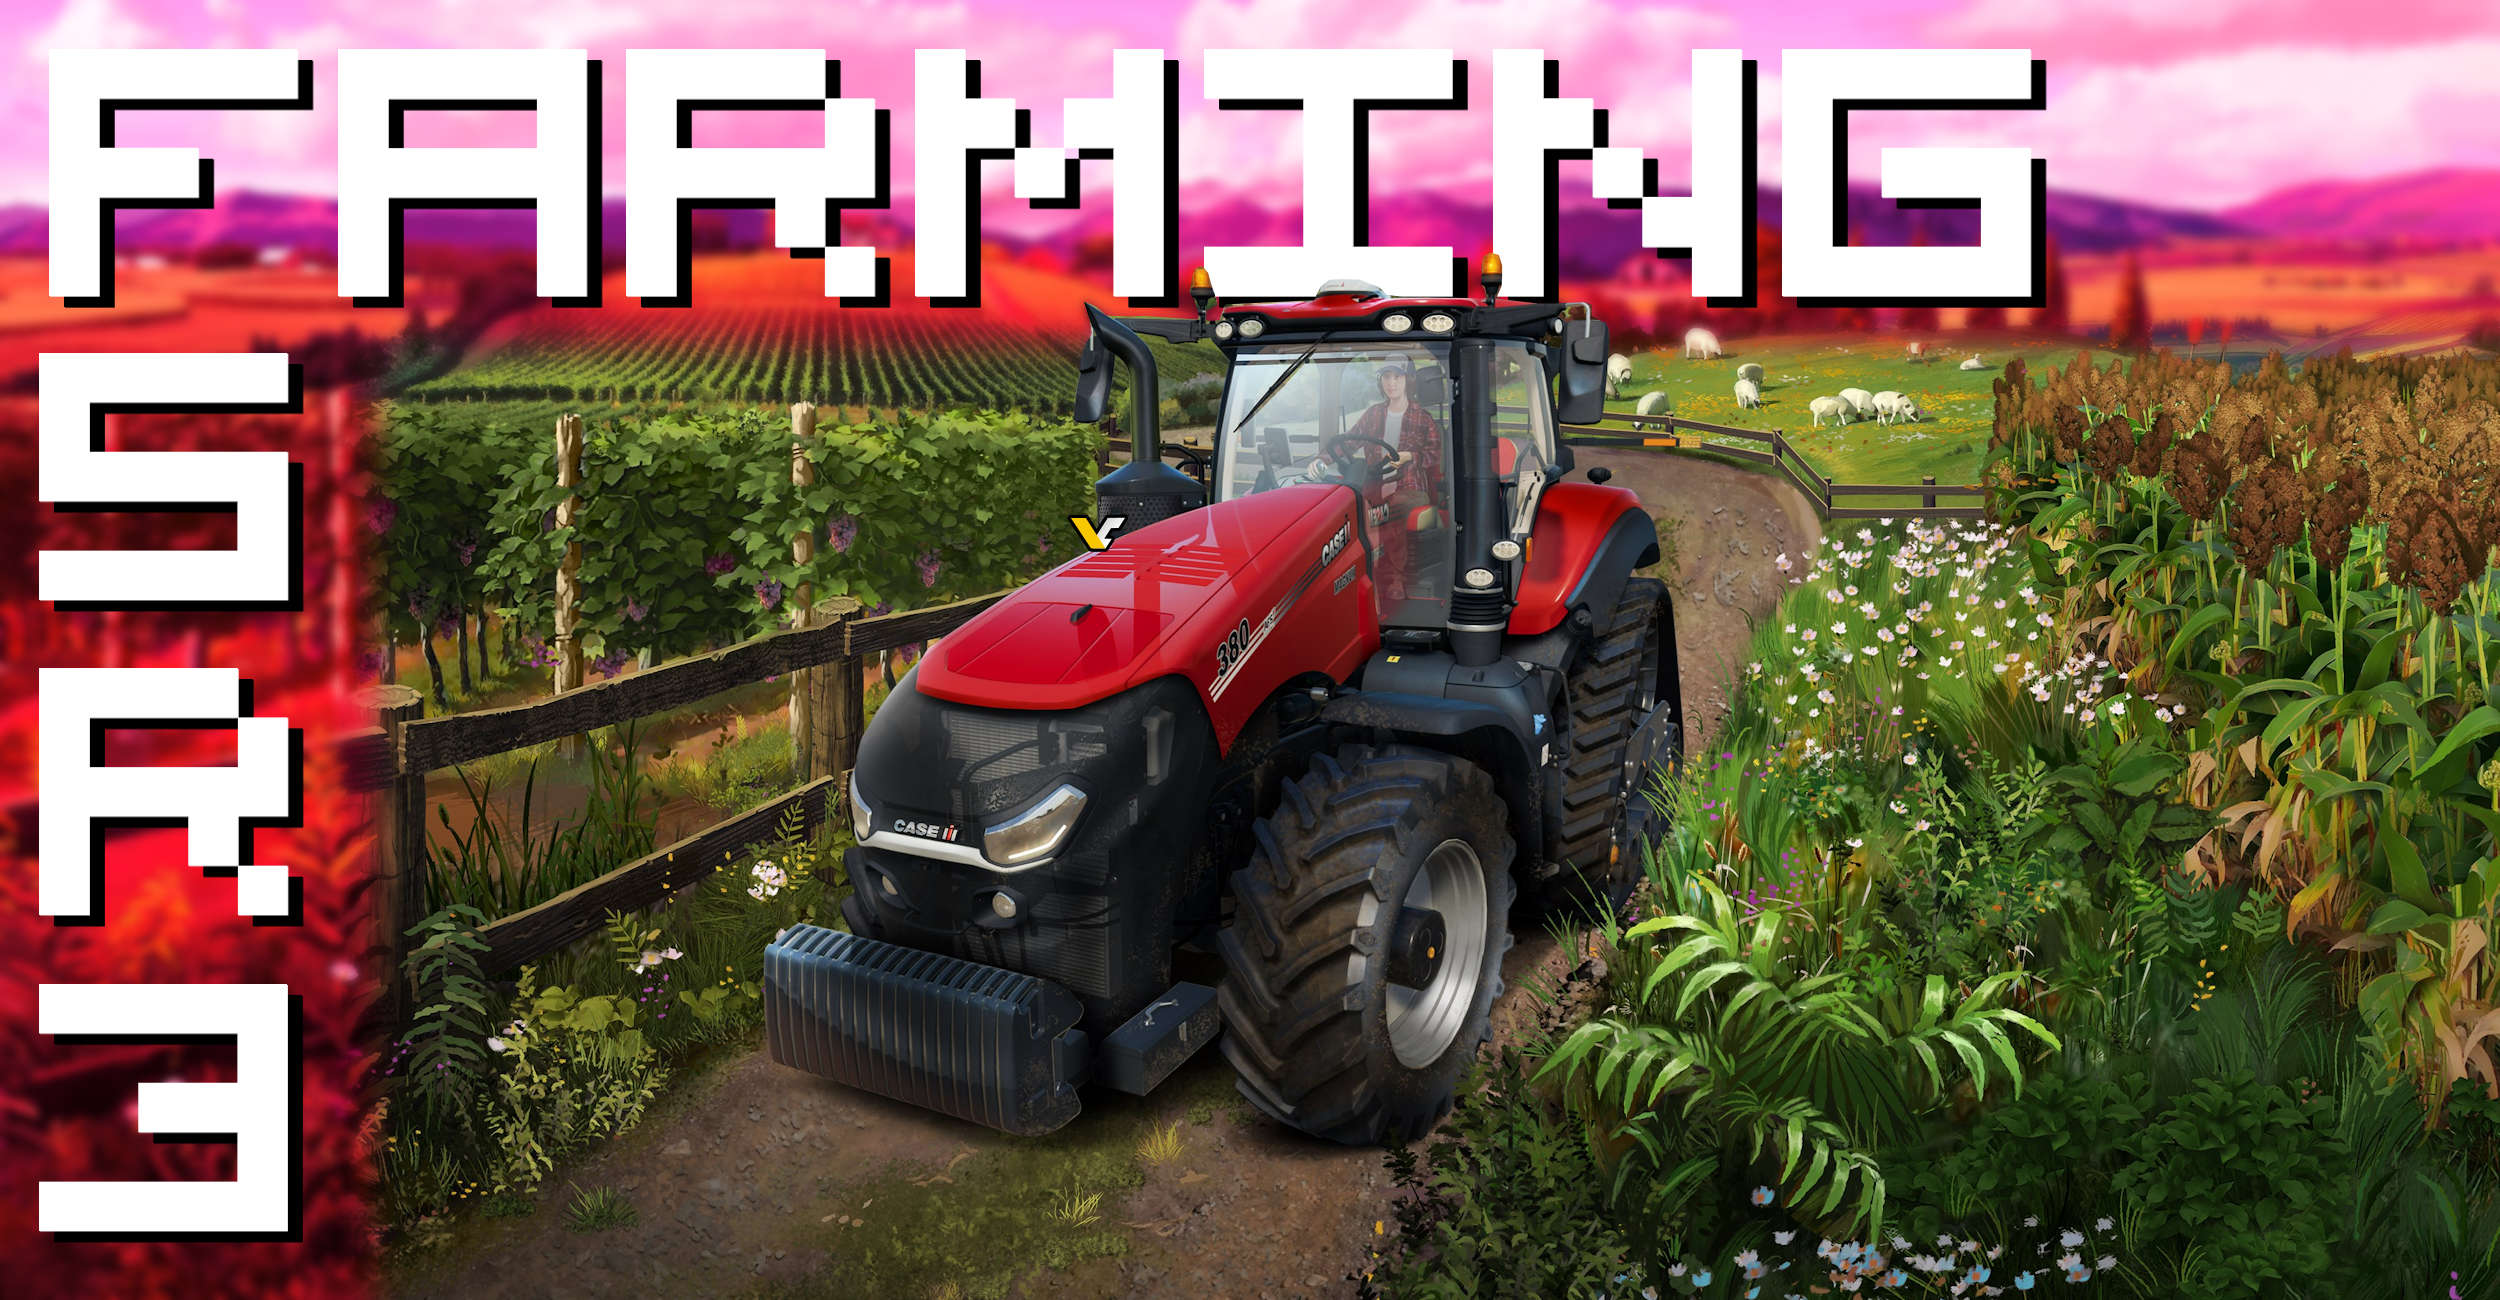 Thrustmaster releases new farm sim peripherals. : r/farmingsimulator